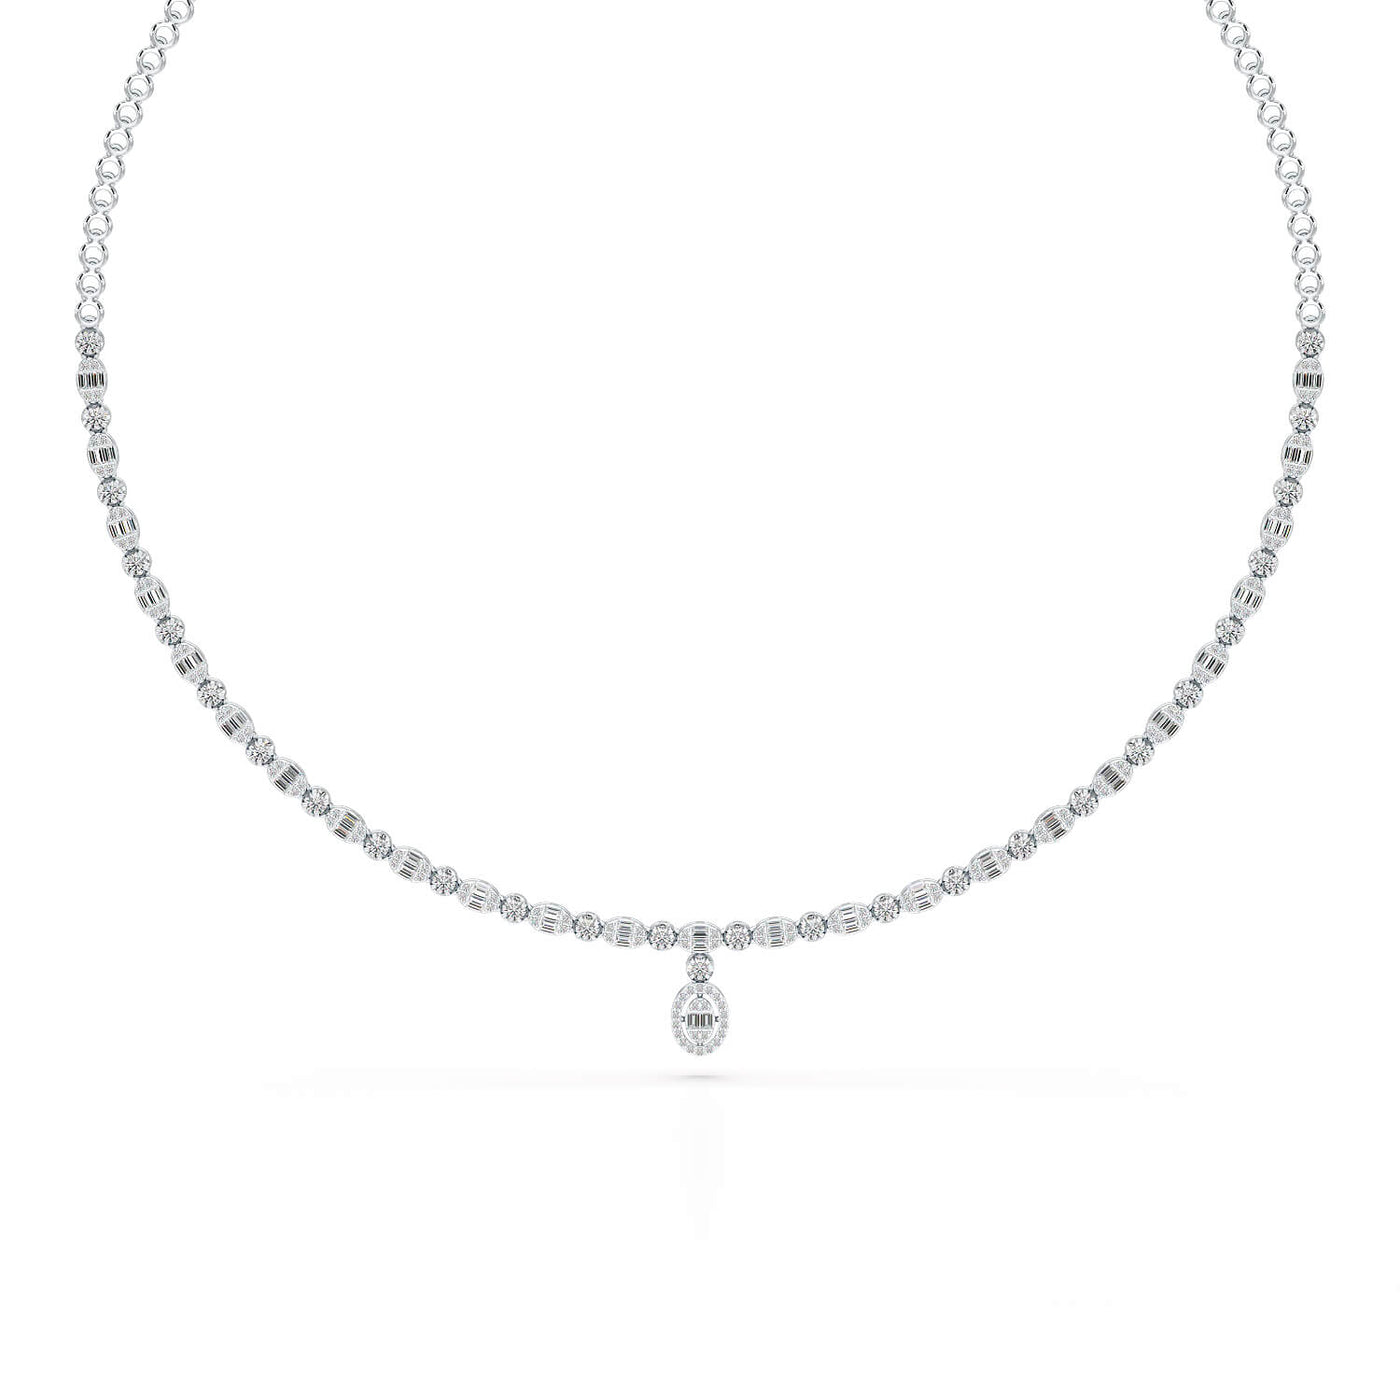 Baguette Cut Lab Created Diamond 3.53 CT Necklace